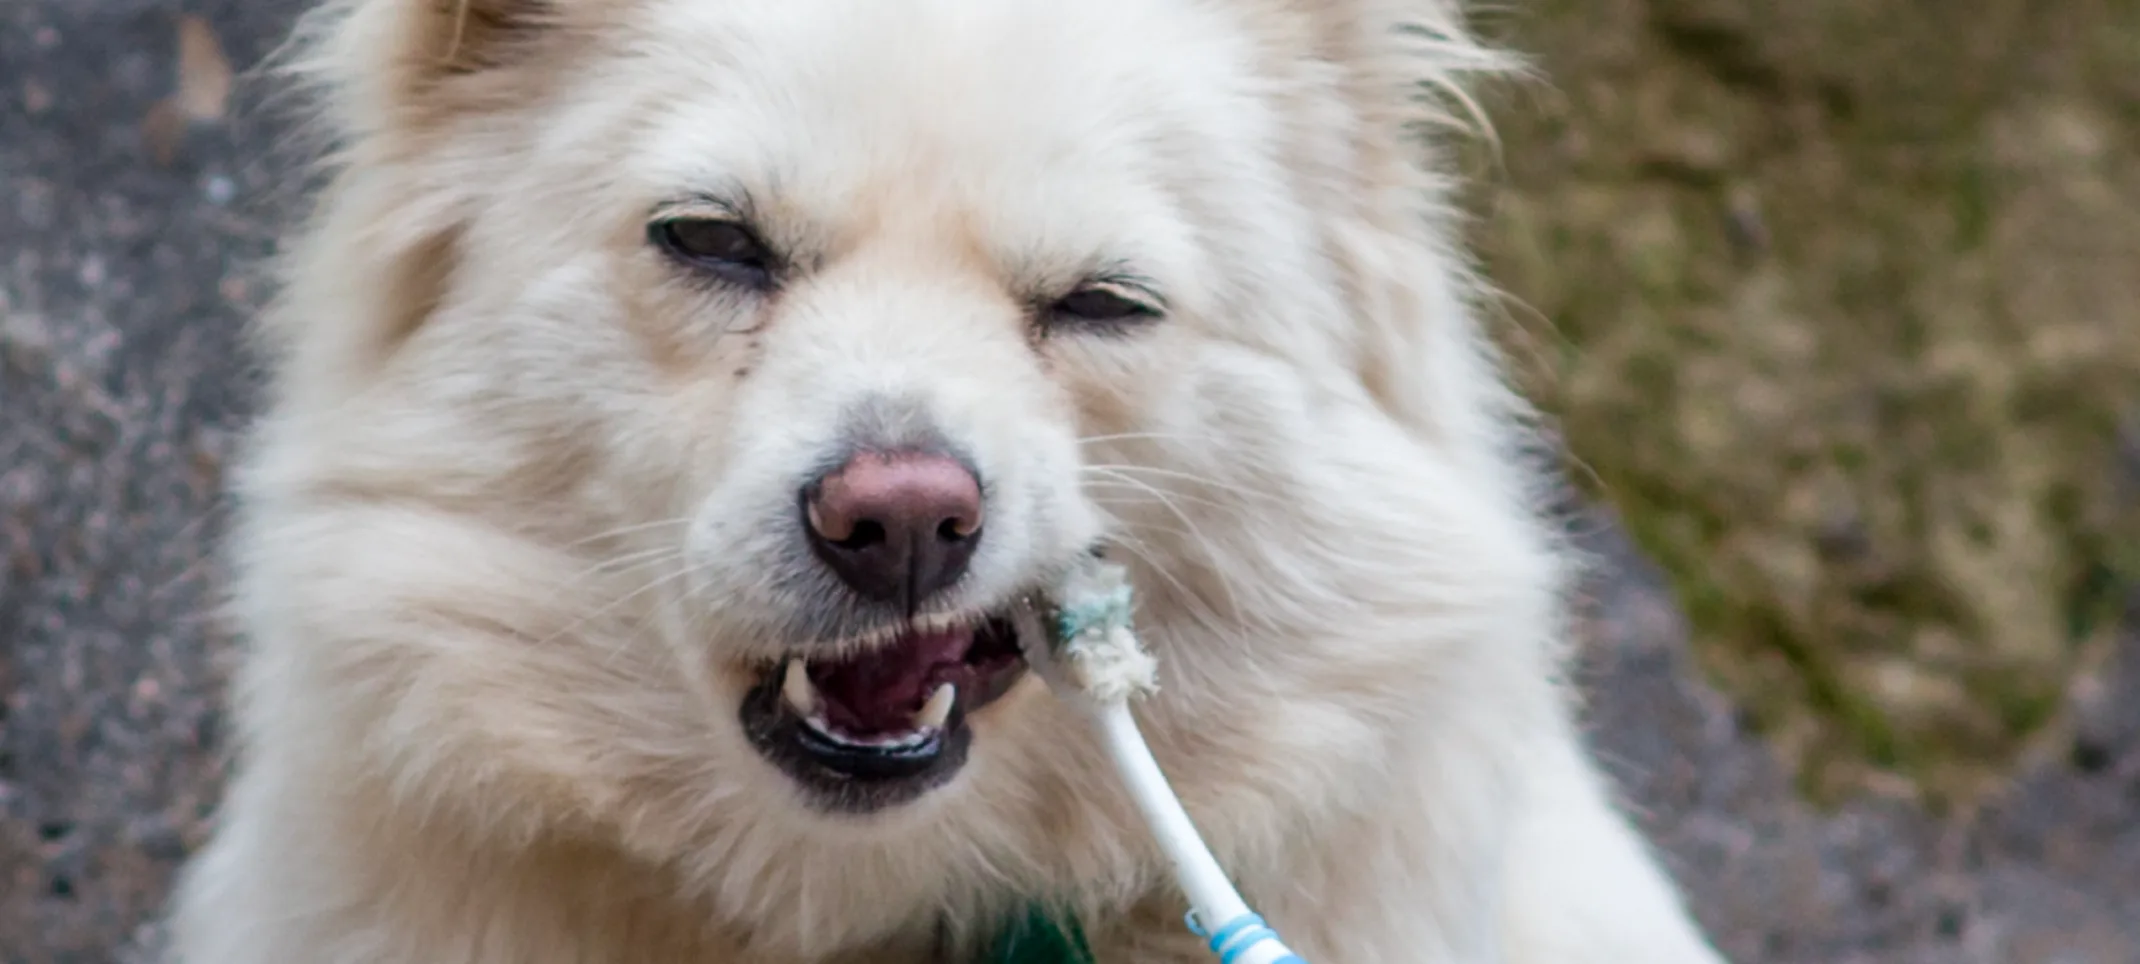 Dog biting tooth brush